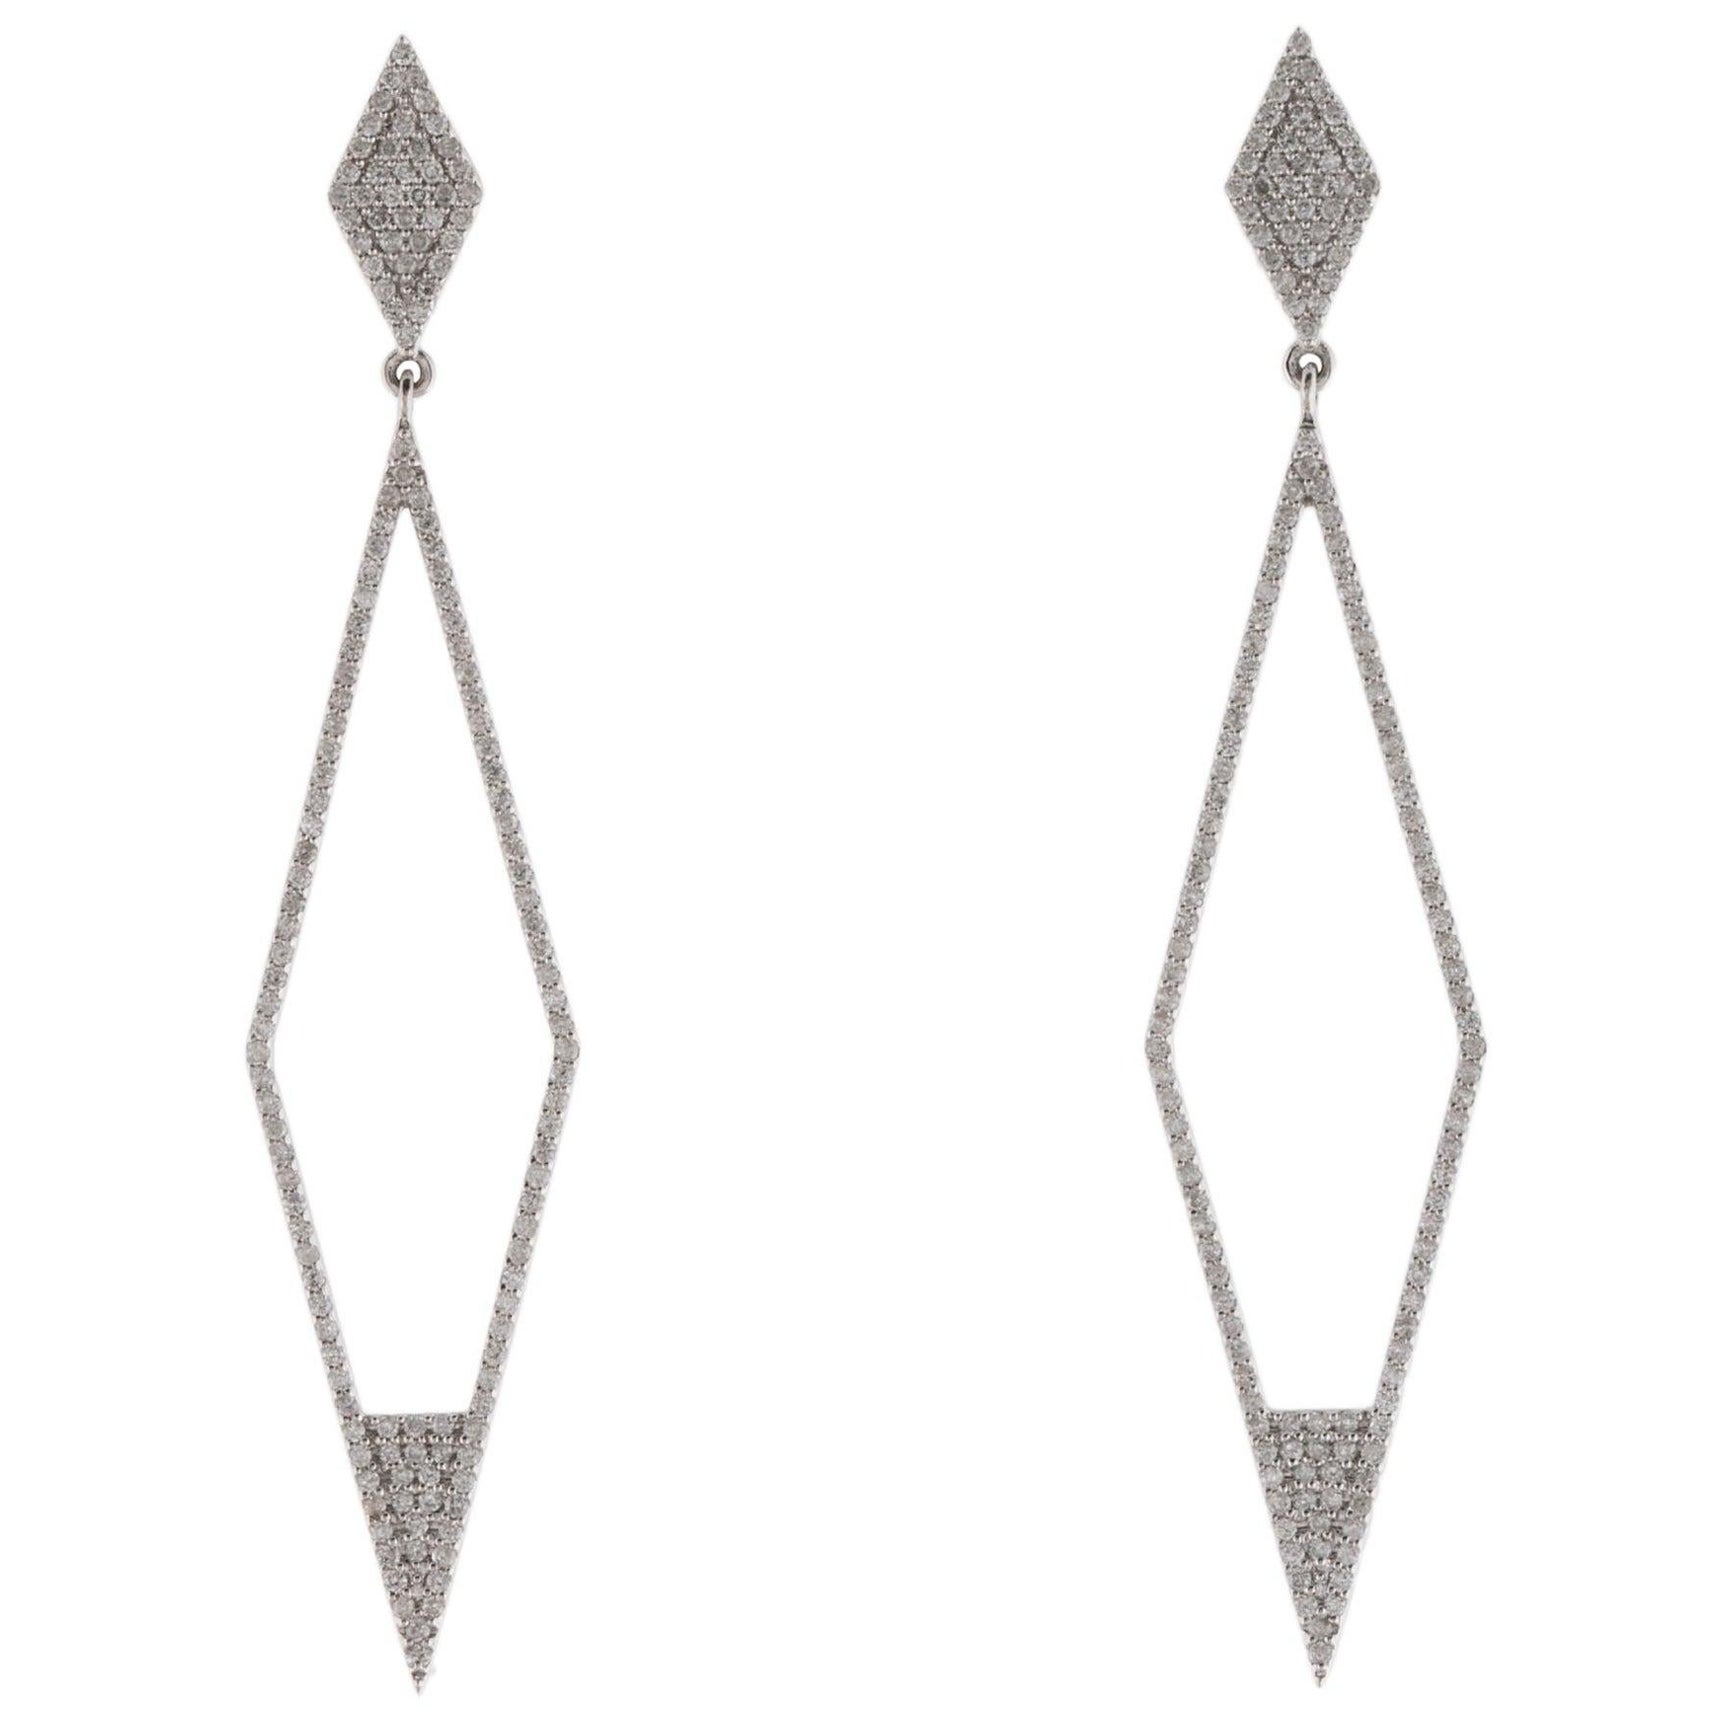 Luxurious 14K White Gold Diamond Drop Earrings - 0.85ct Round Brilliant Cut